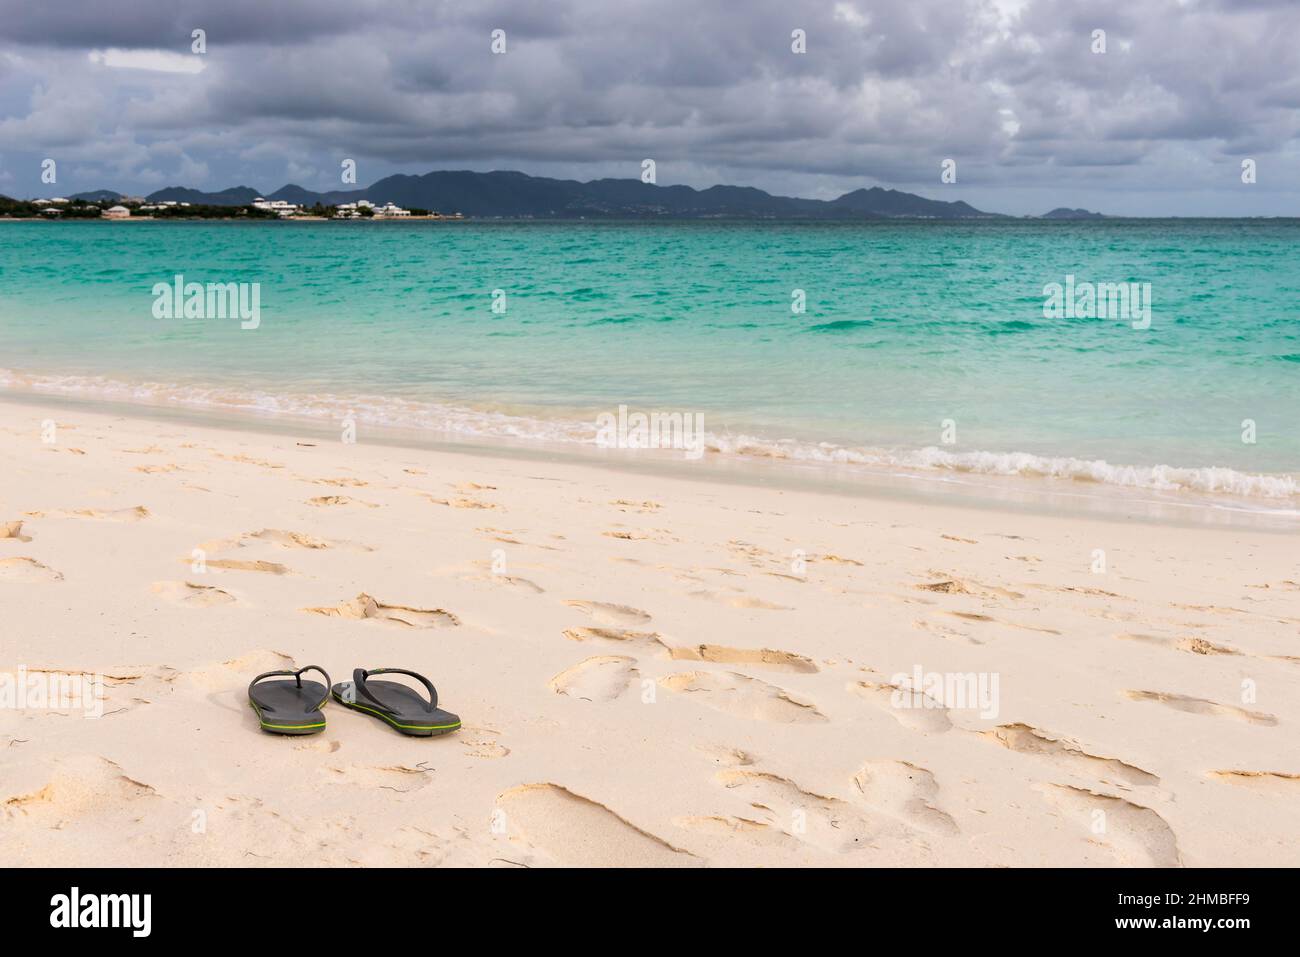 Rendezvous Bay beach at Anguilla, looking towards Saint Martin. Stock Photo